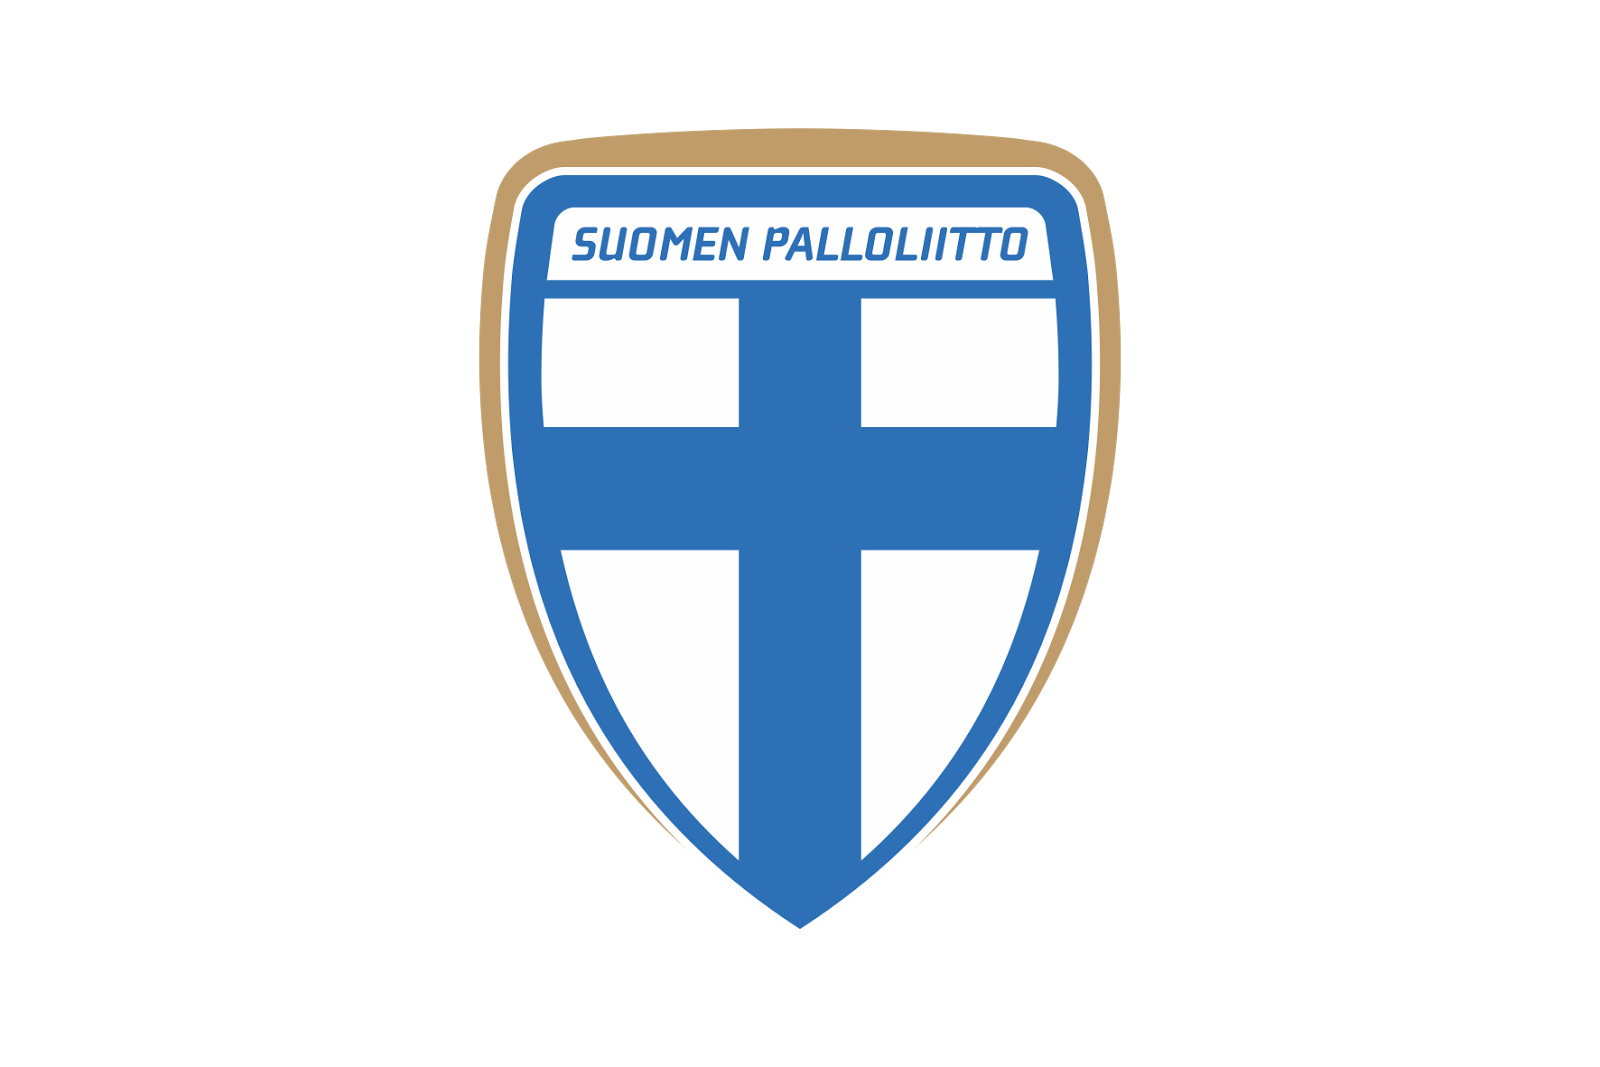 Finland Football Association